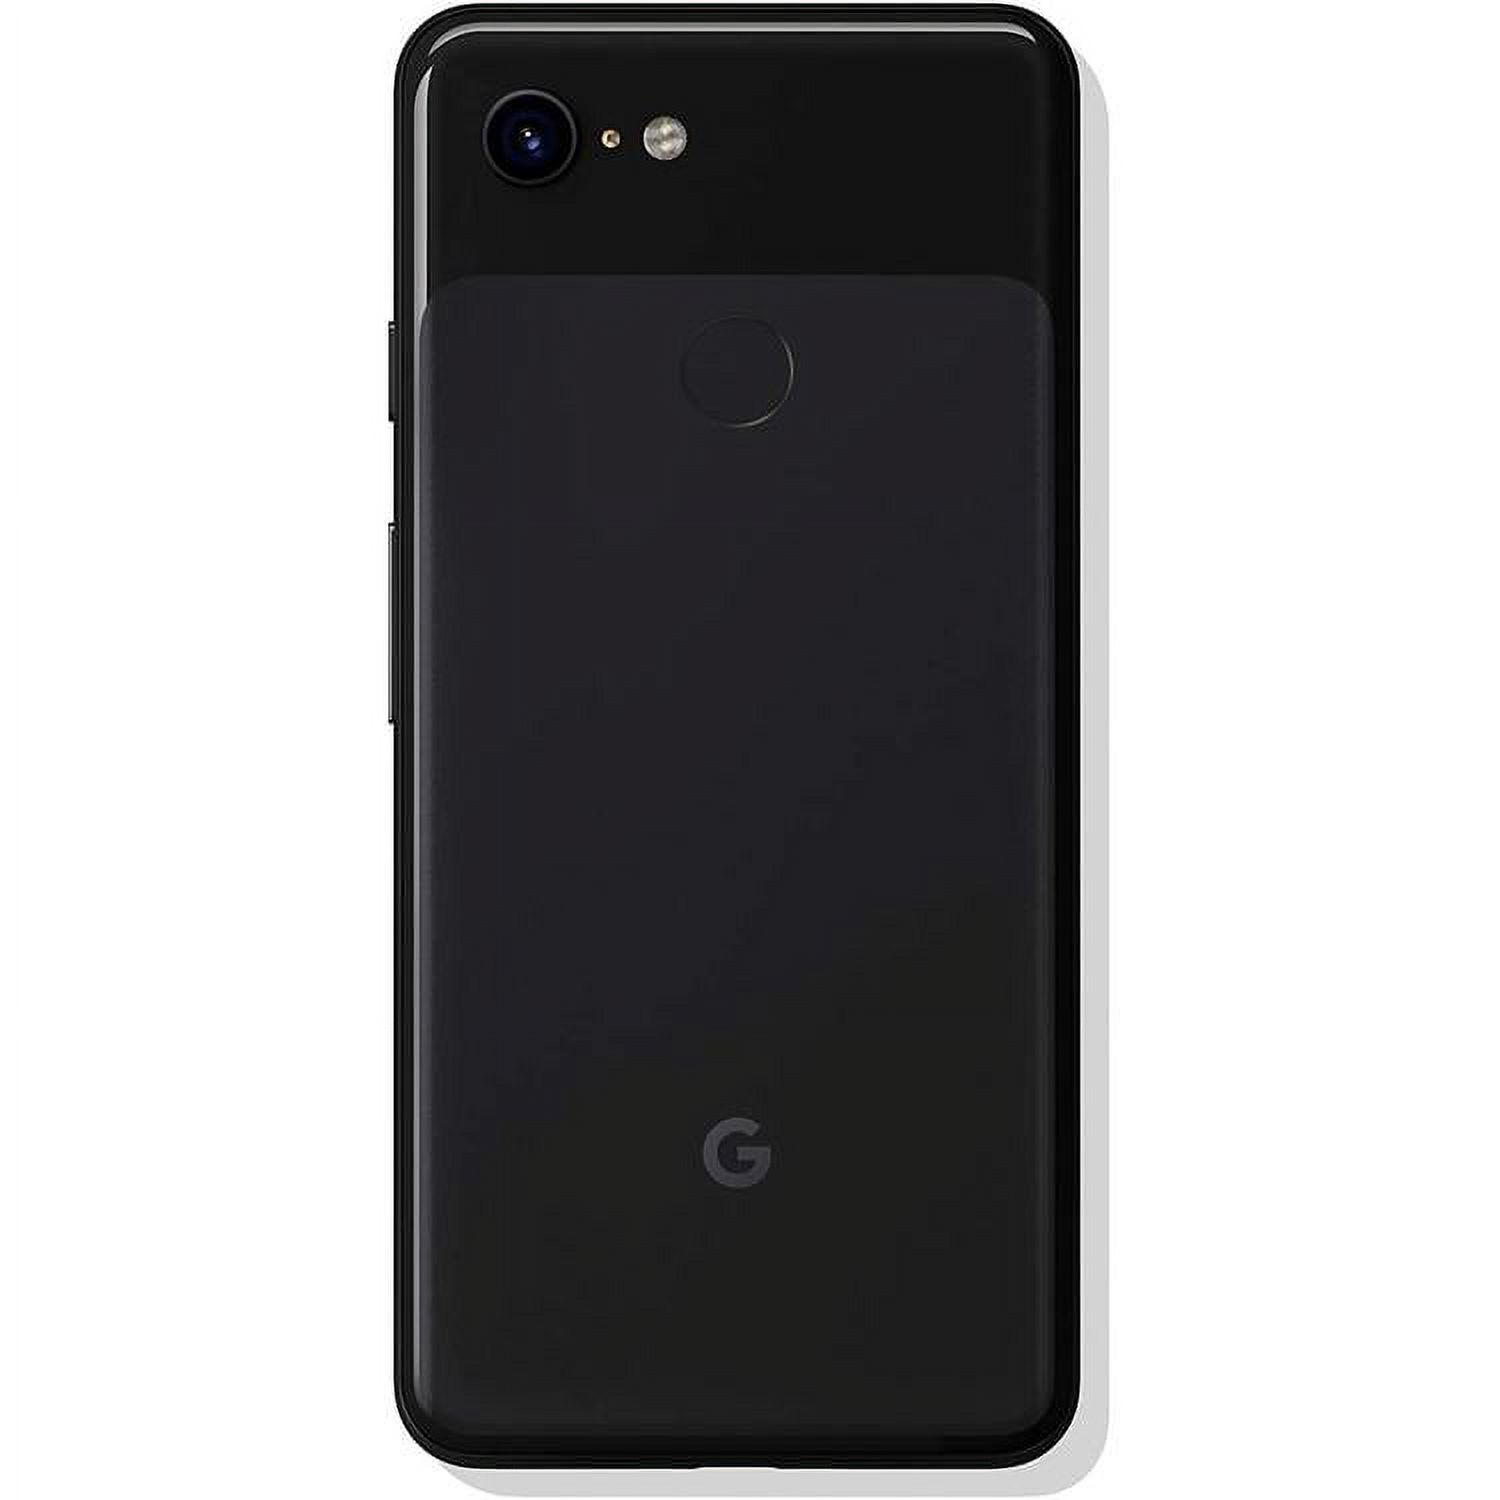 Google Pixel 3 64GB Black (Unlocked) Great Condition - image 2 of 4